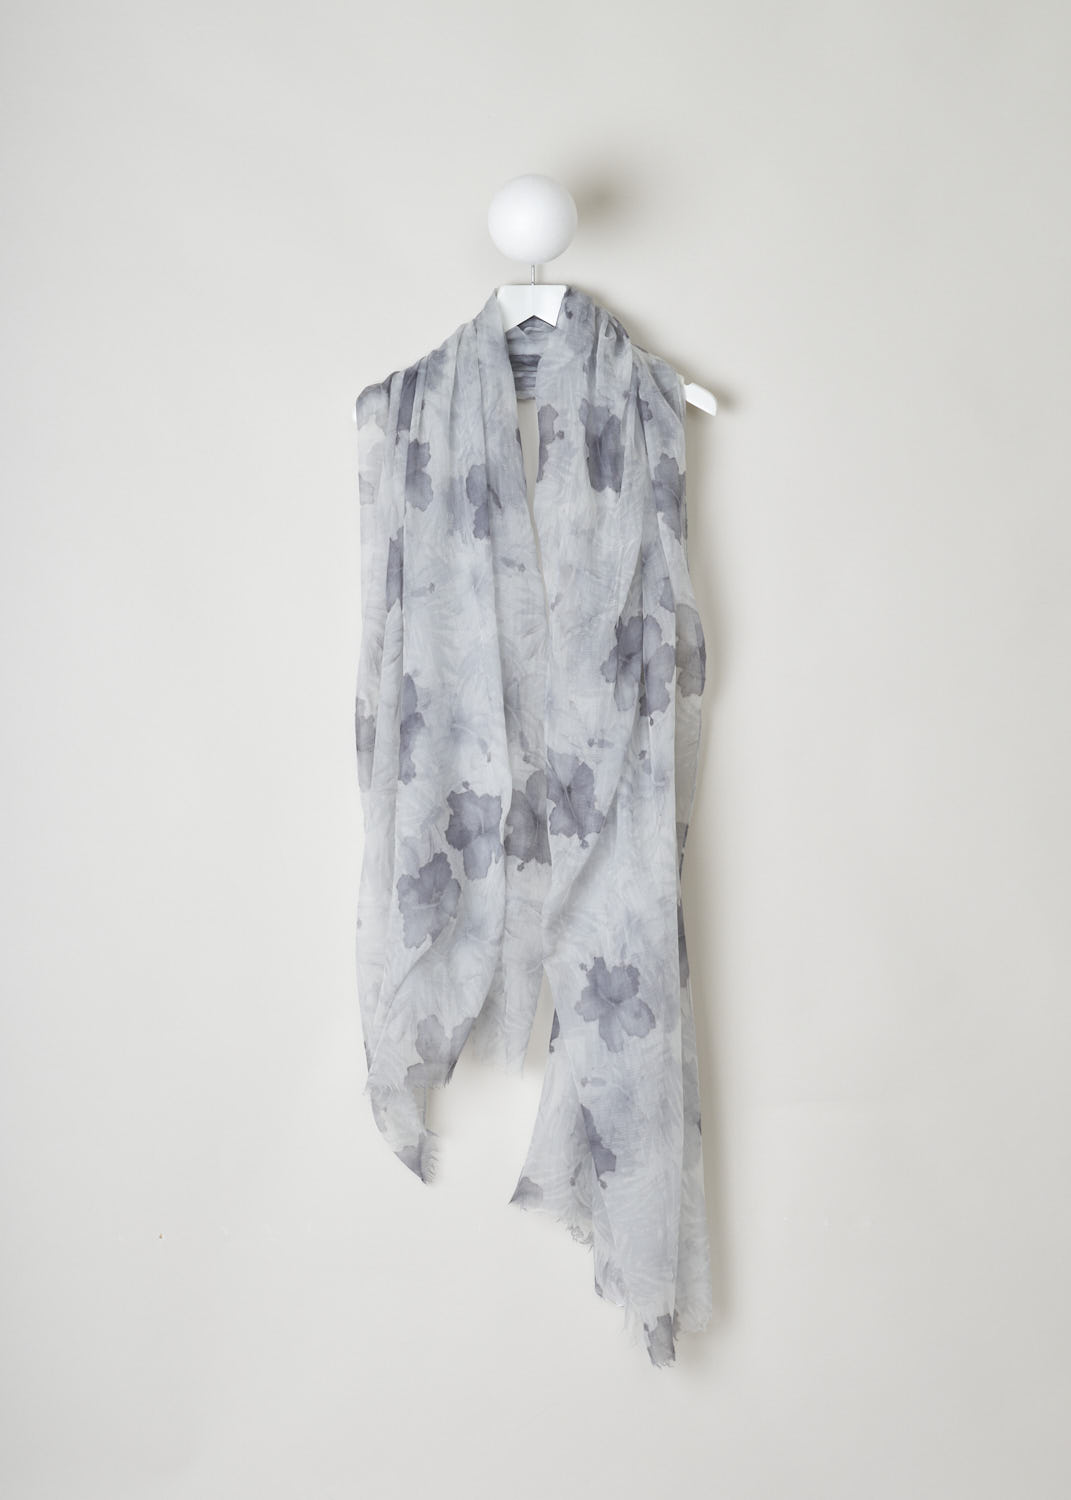 BRUNELLO CUCINELLI, FLORAL PRINT SHAWL IN GREY SHADES, MSCDAGW06_CF195, Grey, Print, Front, Beautiful shawl with a floral pattern in soft grey hues. 

Length: 230 cm / 90.5 inch.
